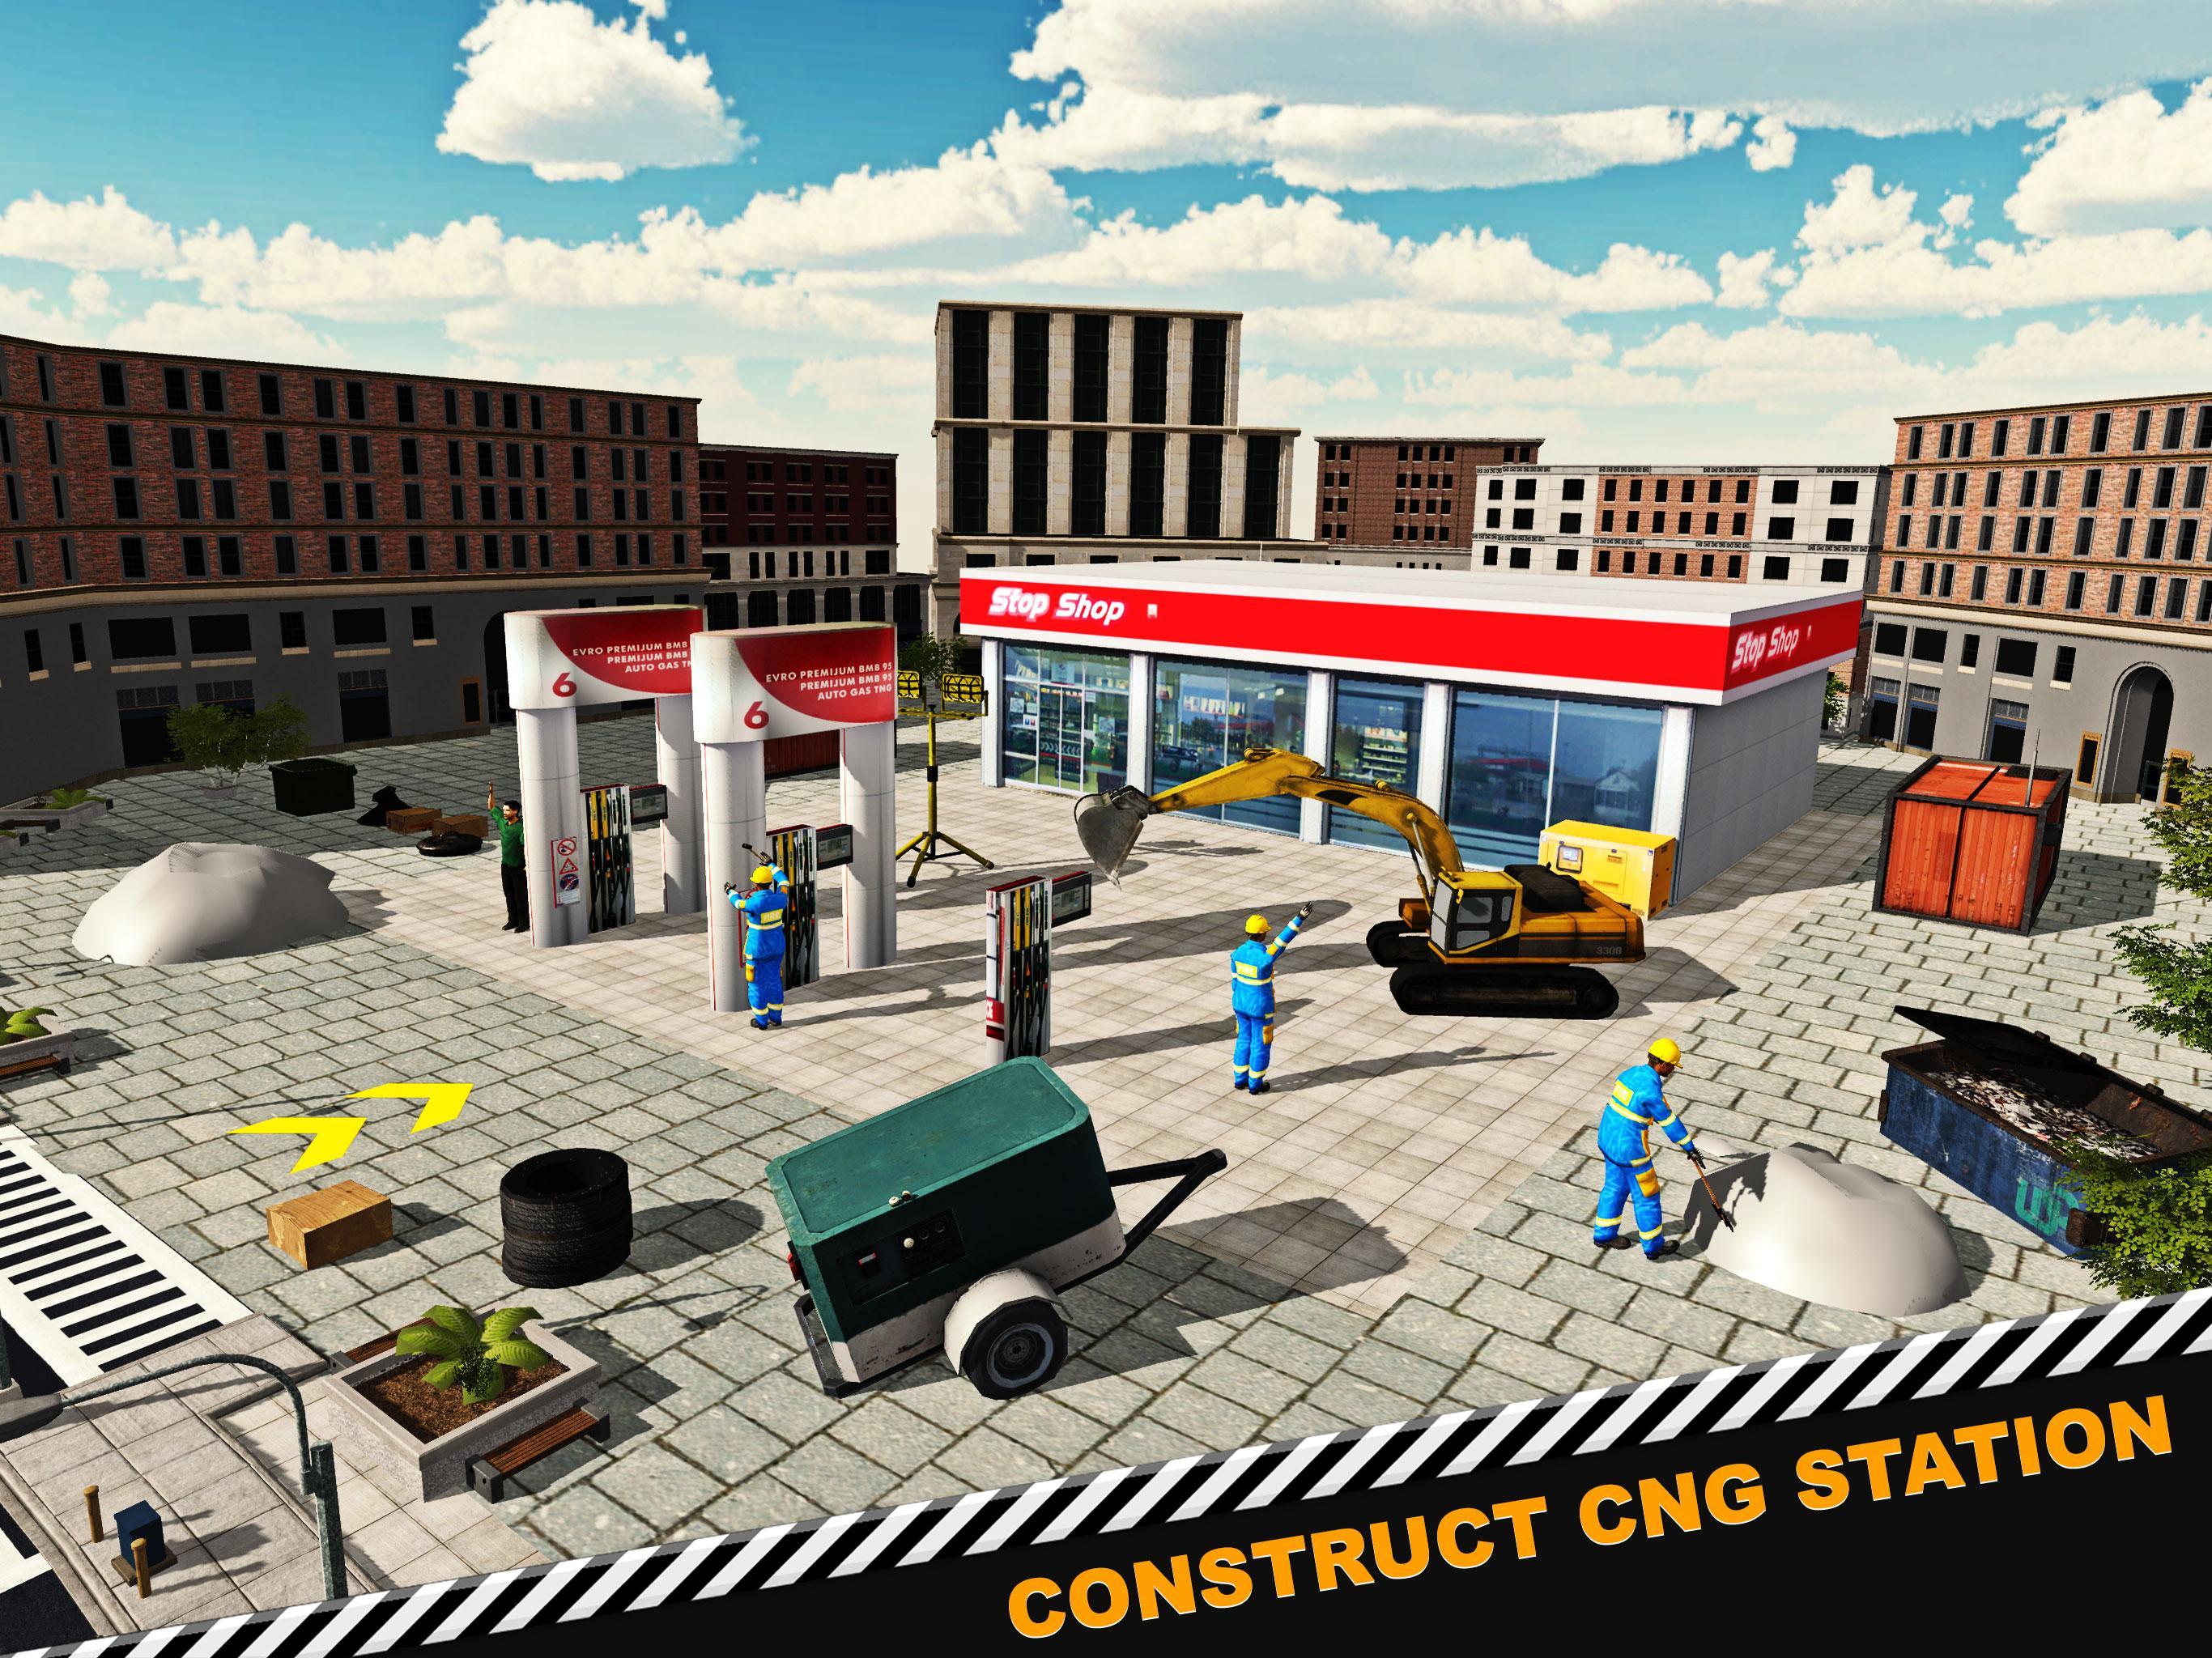 Gas station simulator трейнер. Гас Стейшен симулятор. Игра про строительство магазина. Симулятор строительного магазина. Симулятор газовой станции.